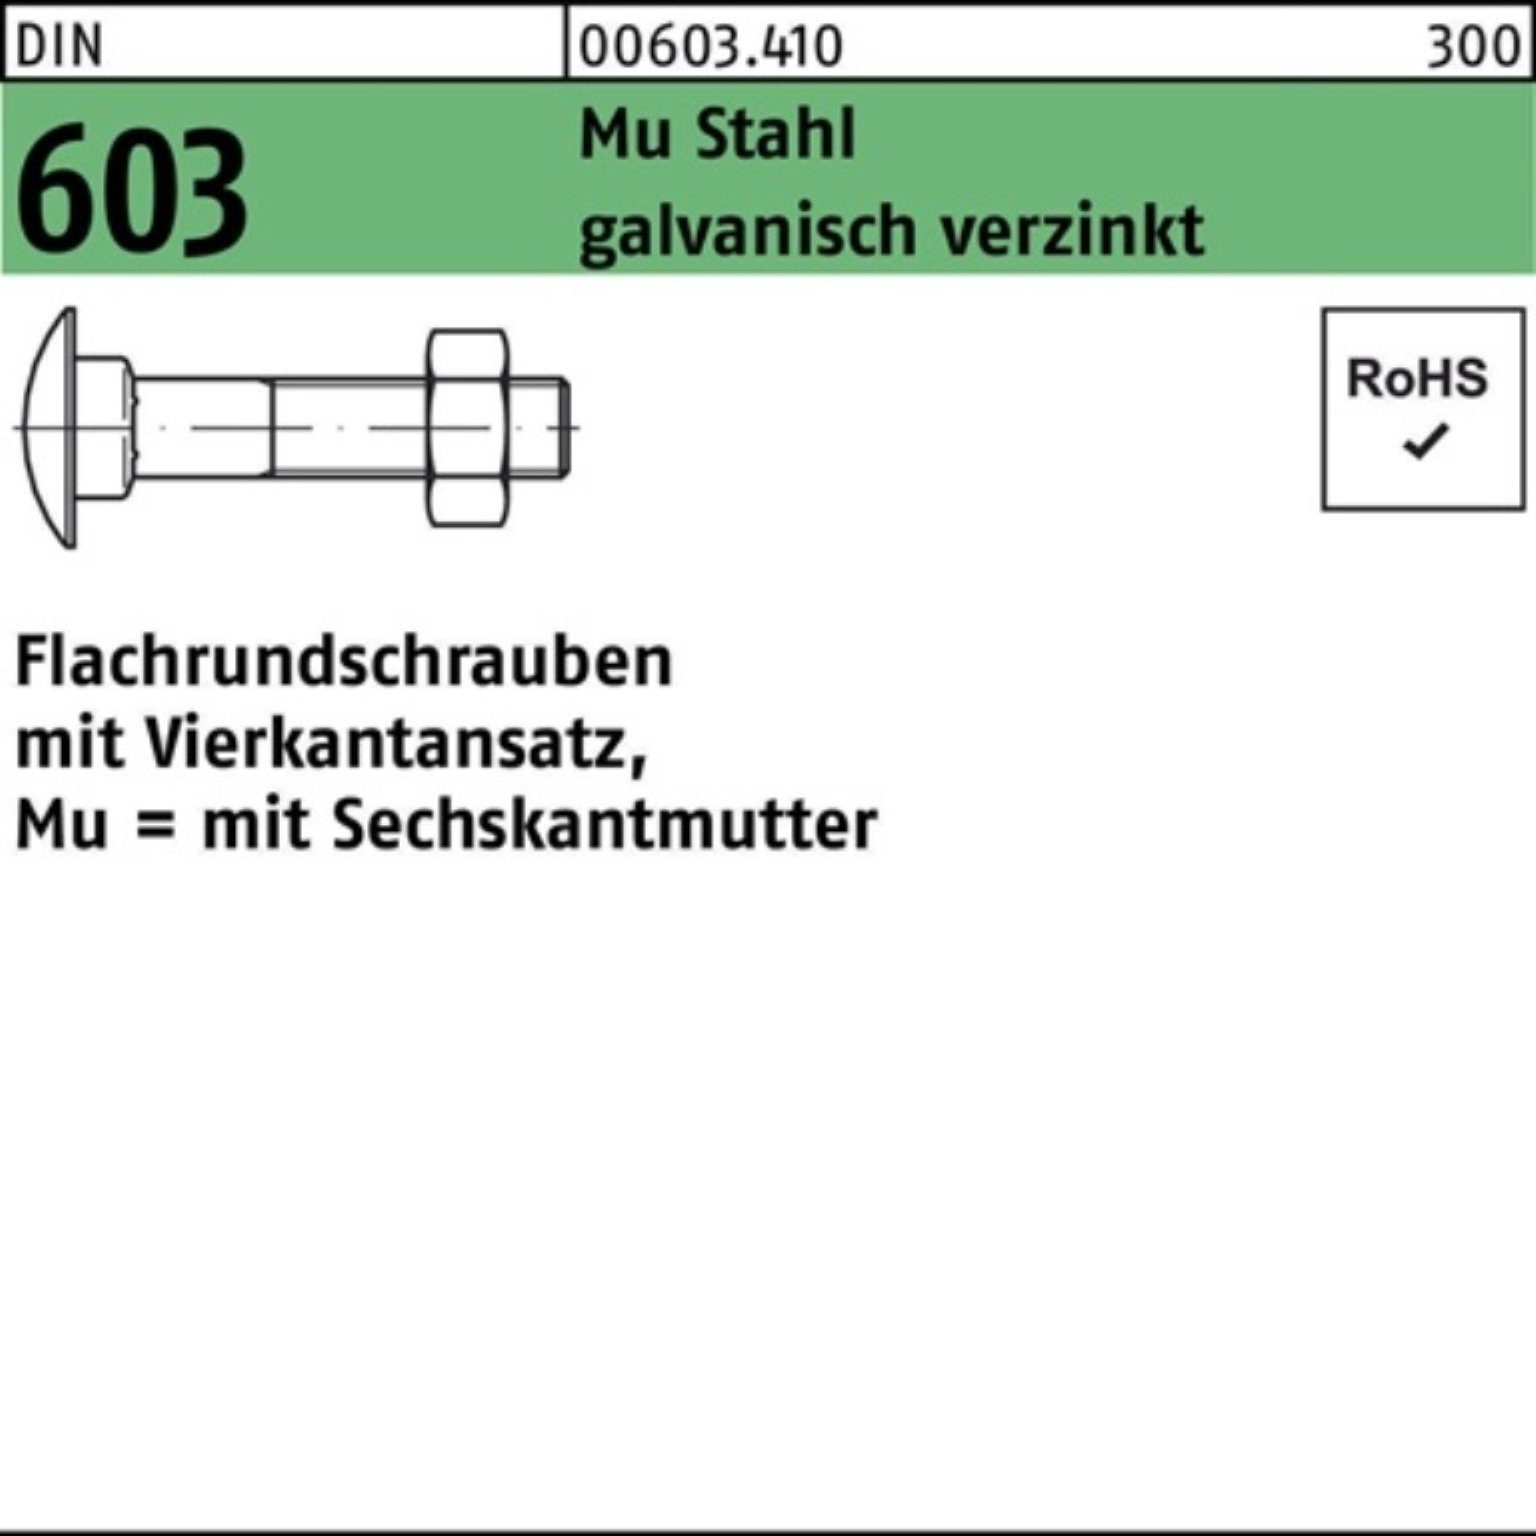 Reyher Schraube Flachrundschraube 603 Vierkantansatz/6-ktmutter Pack M10x65 100er DIN